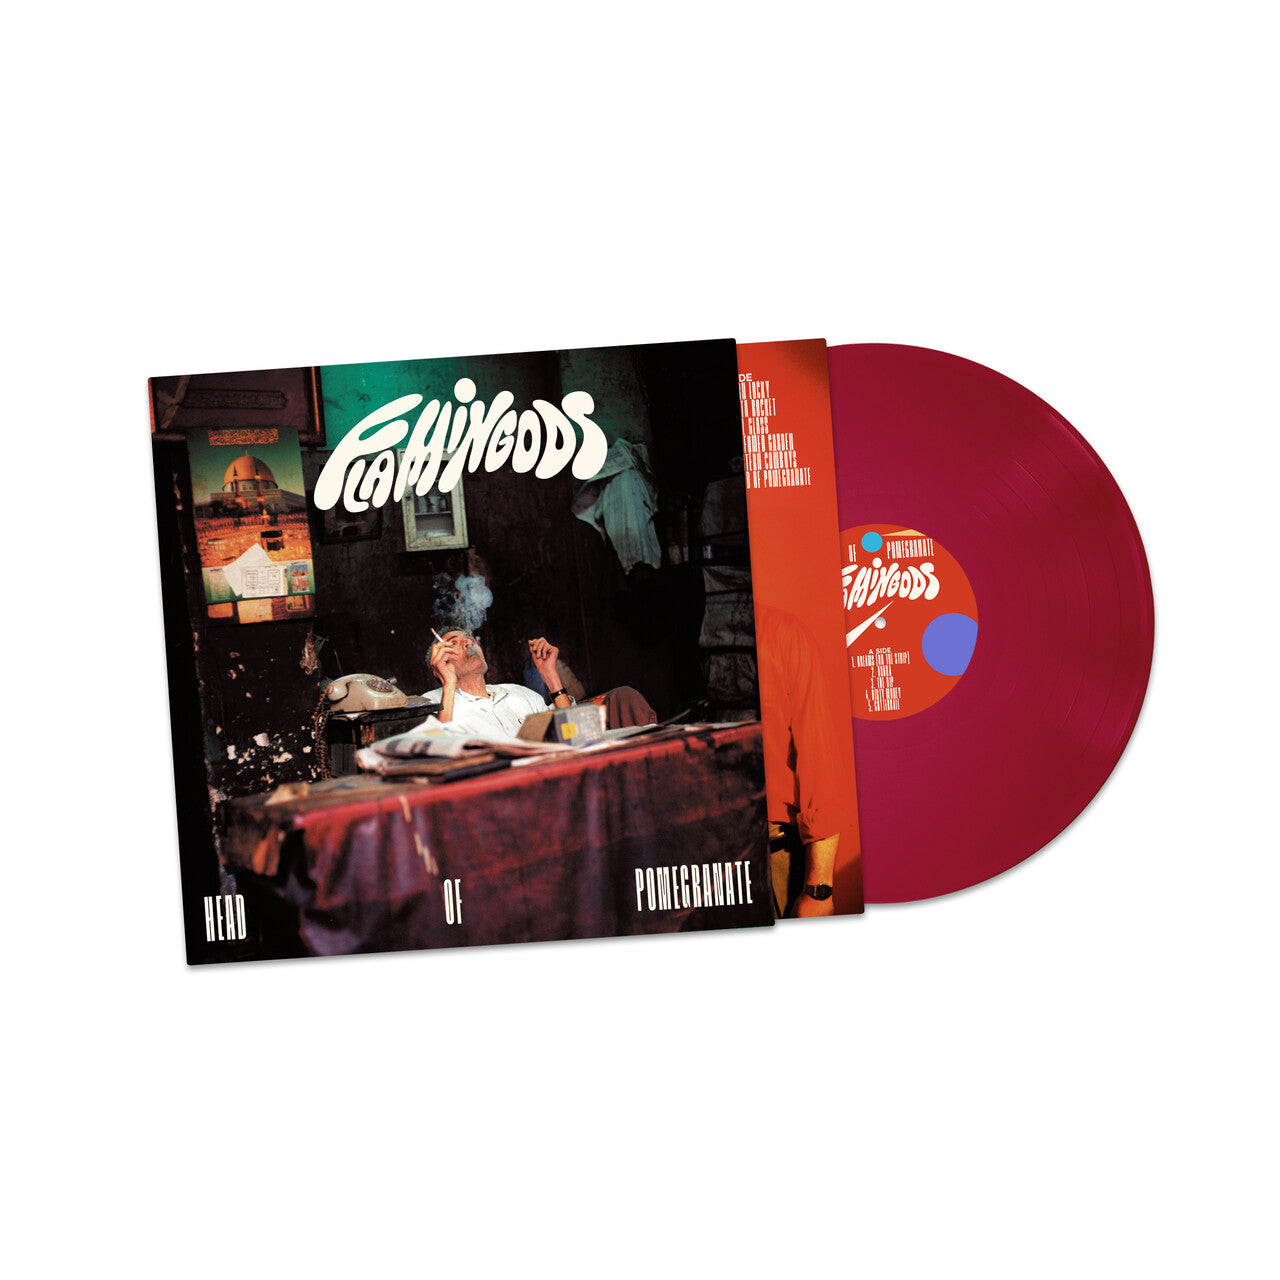 Flamingods - Head Of Pomegranate: Limited Pomegranate Colour Vinyl LP